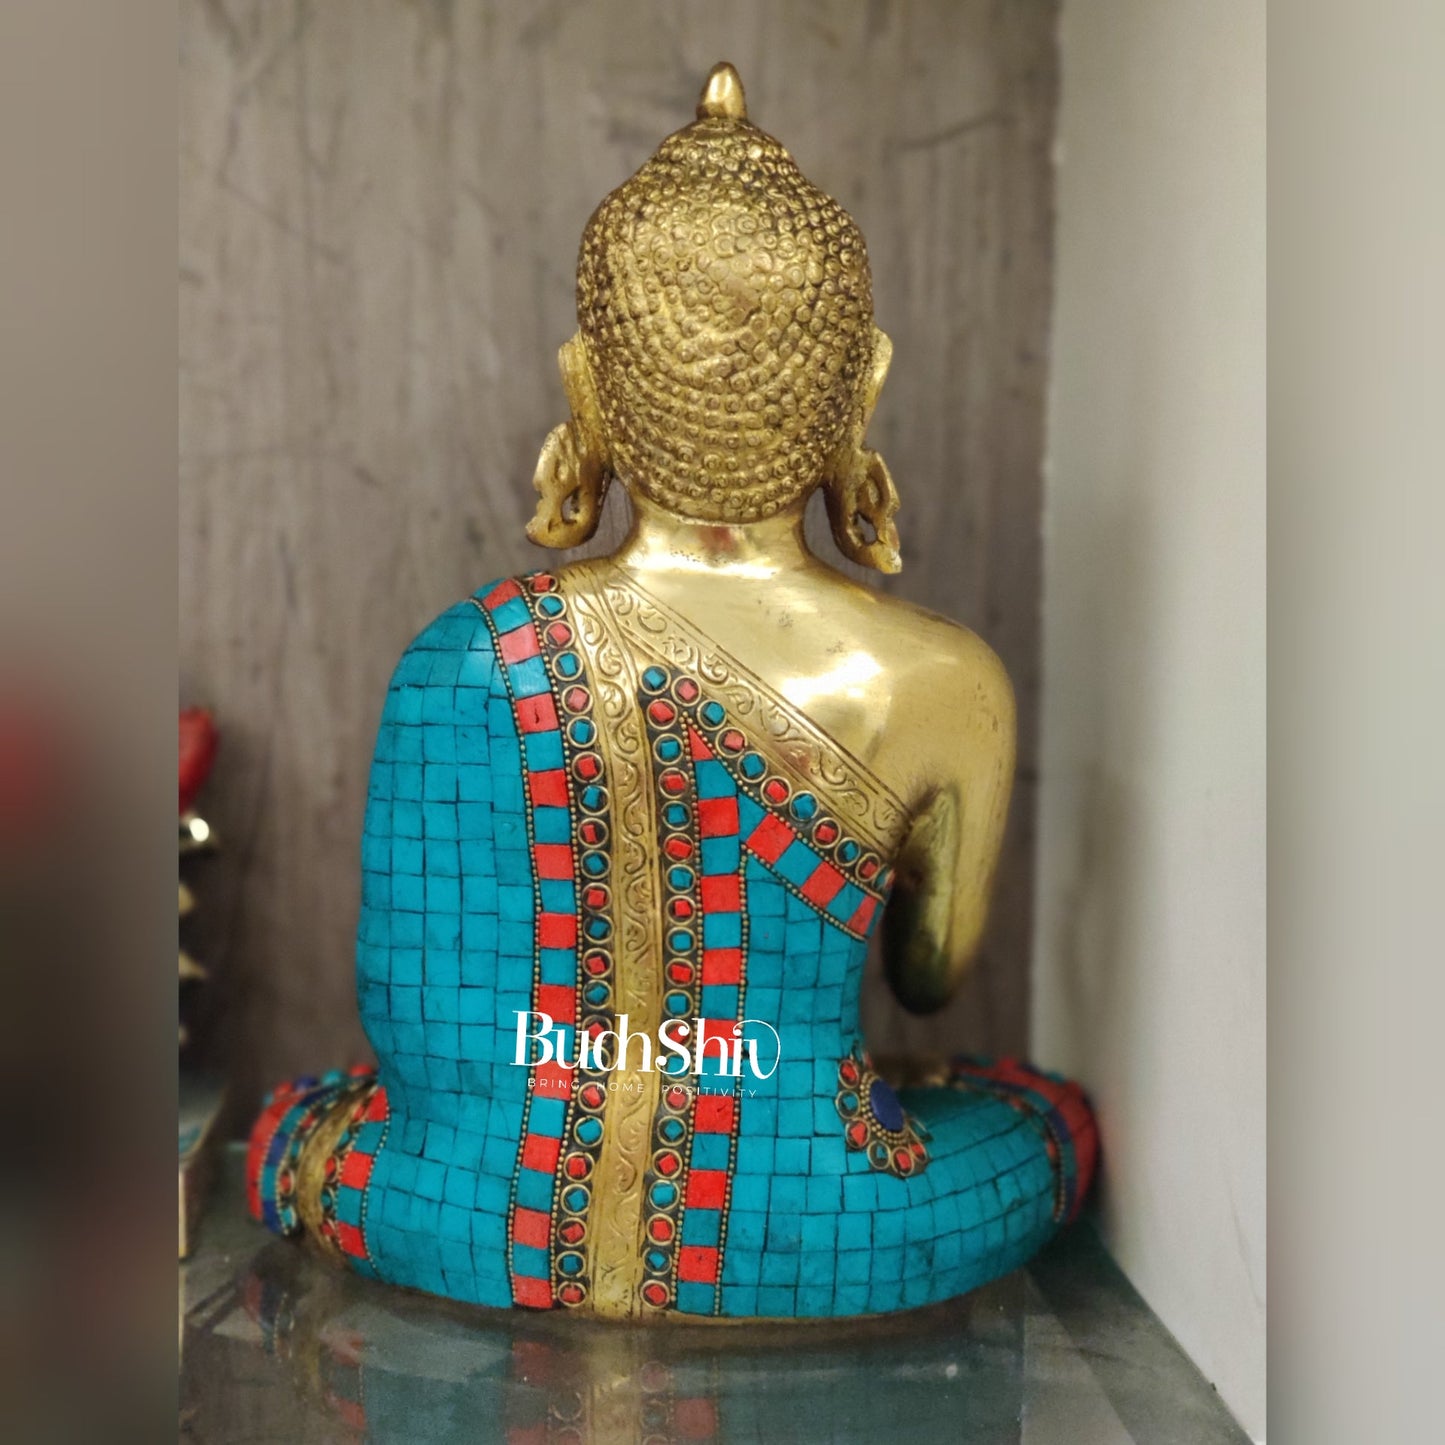 Aashirwaad Buddha Brass Idol with Meenakari Stonework 12 inch - Budhshiv.com